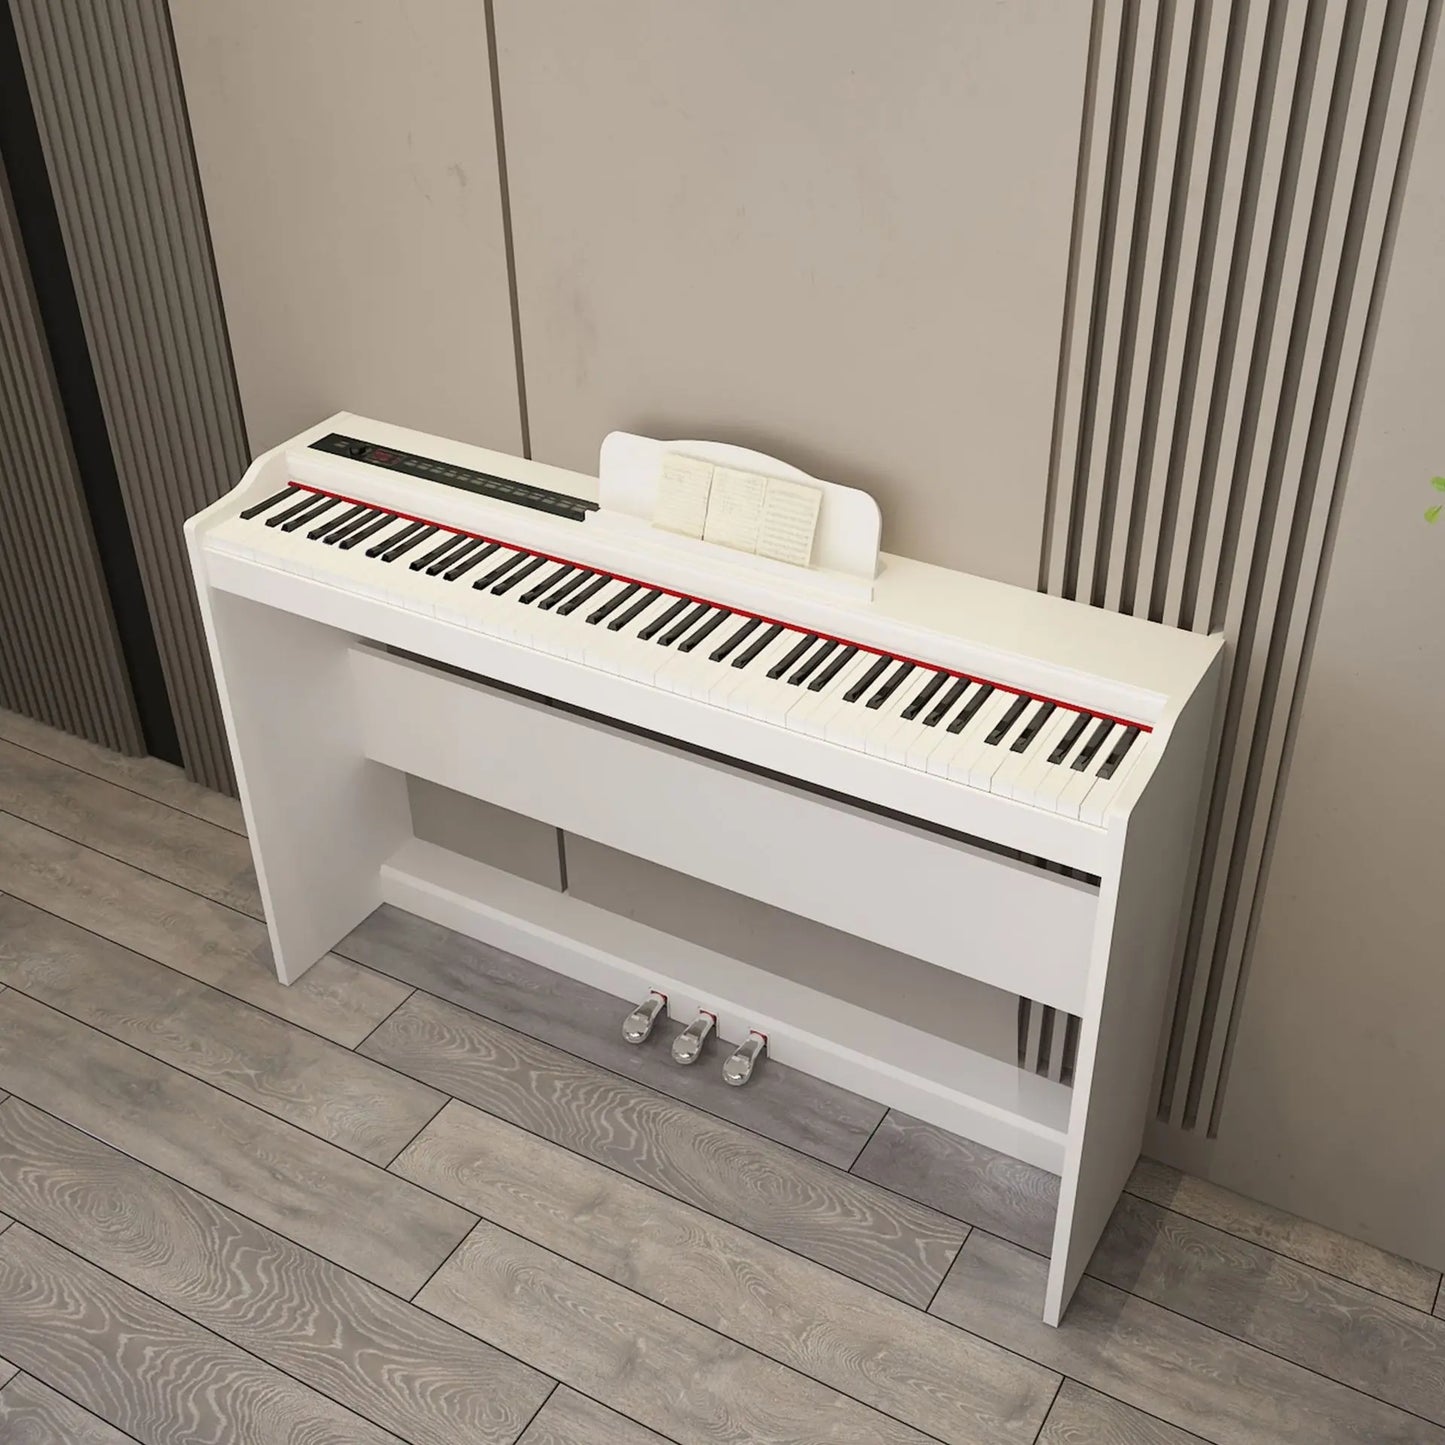 Portable Electronic Piano 88 Key Flexible Child Digital Piano Best Selling Electronics Piano Infantil Synthesizer Keyboard